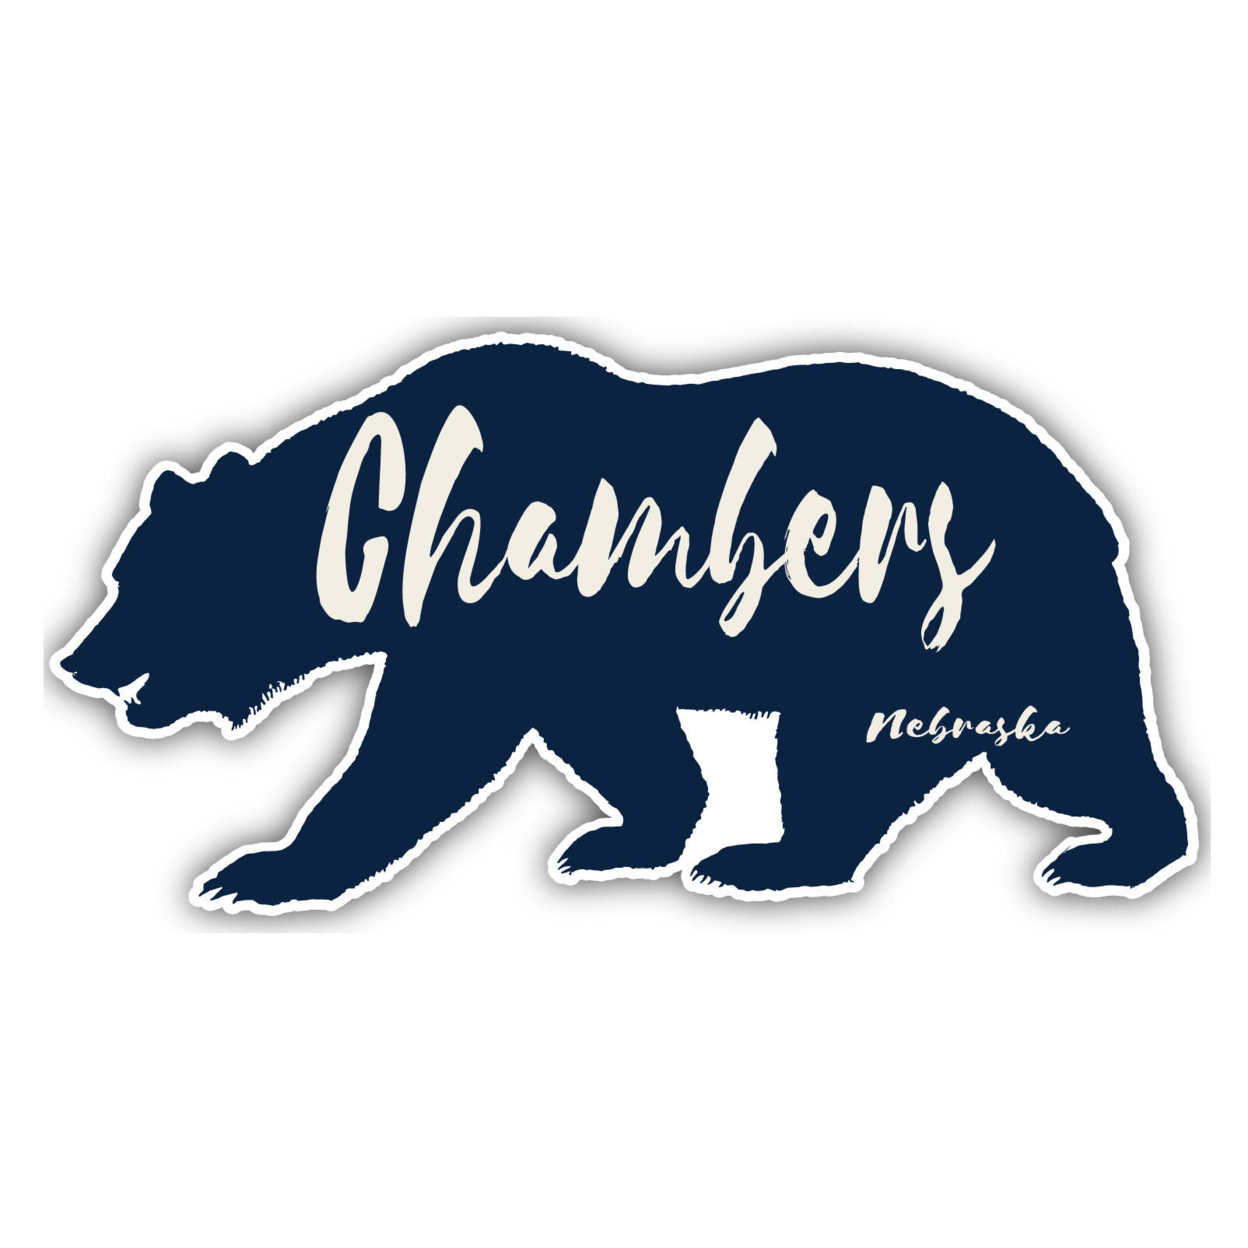 Chambers Nebraska Souvenir Decorative Stickers (Choose Theme And Size) - Single Unit, 10-Inch, Bear